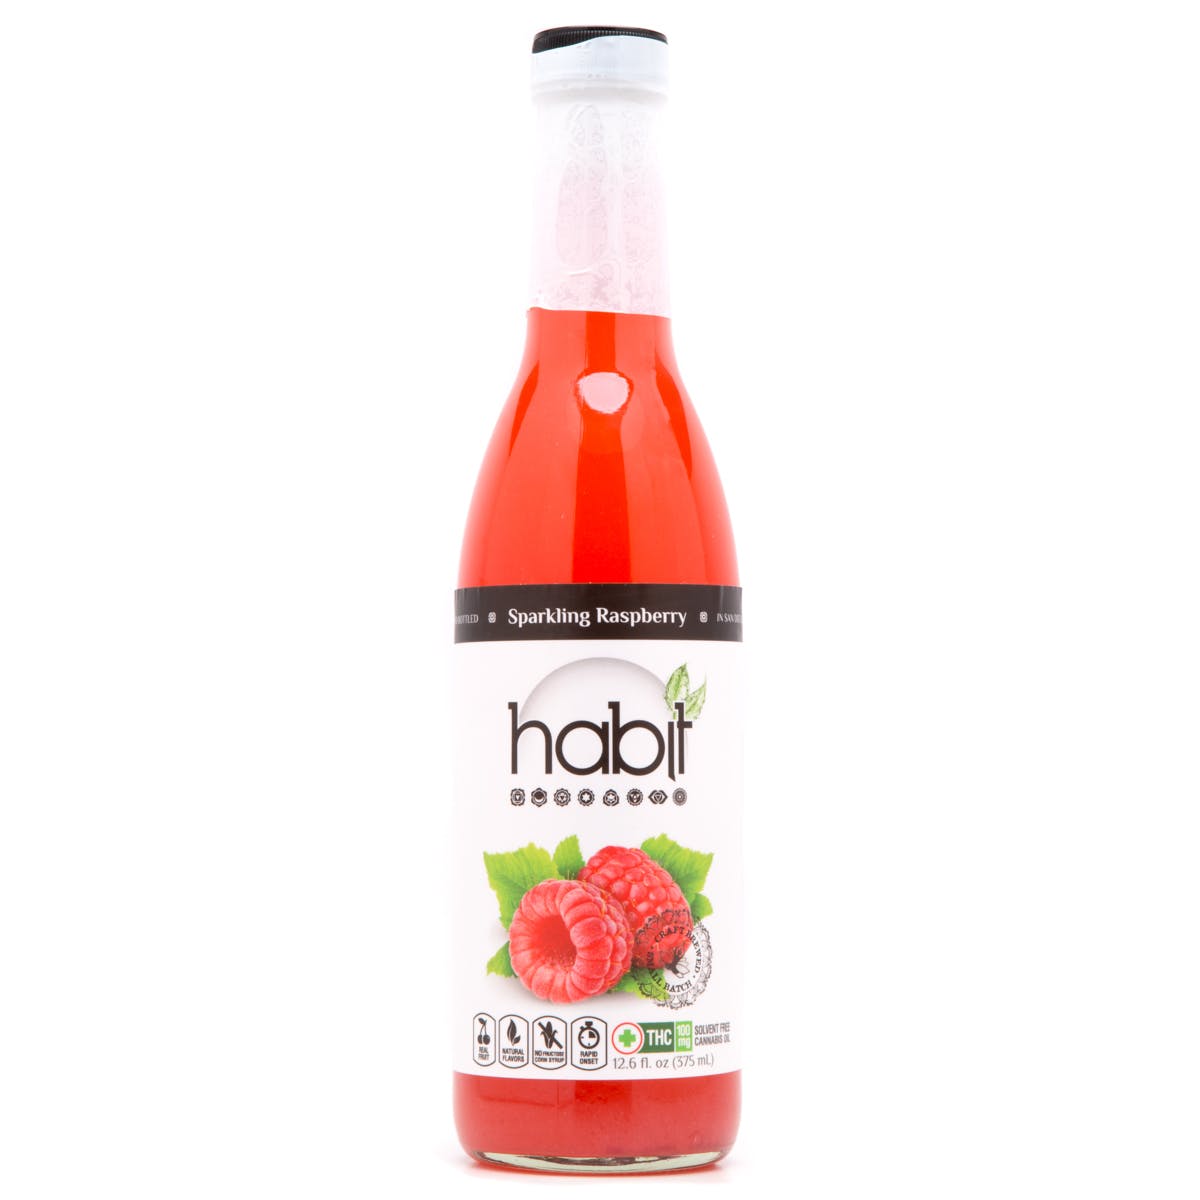 Habit Sparkling Raspberry Beverage, 100mg